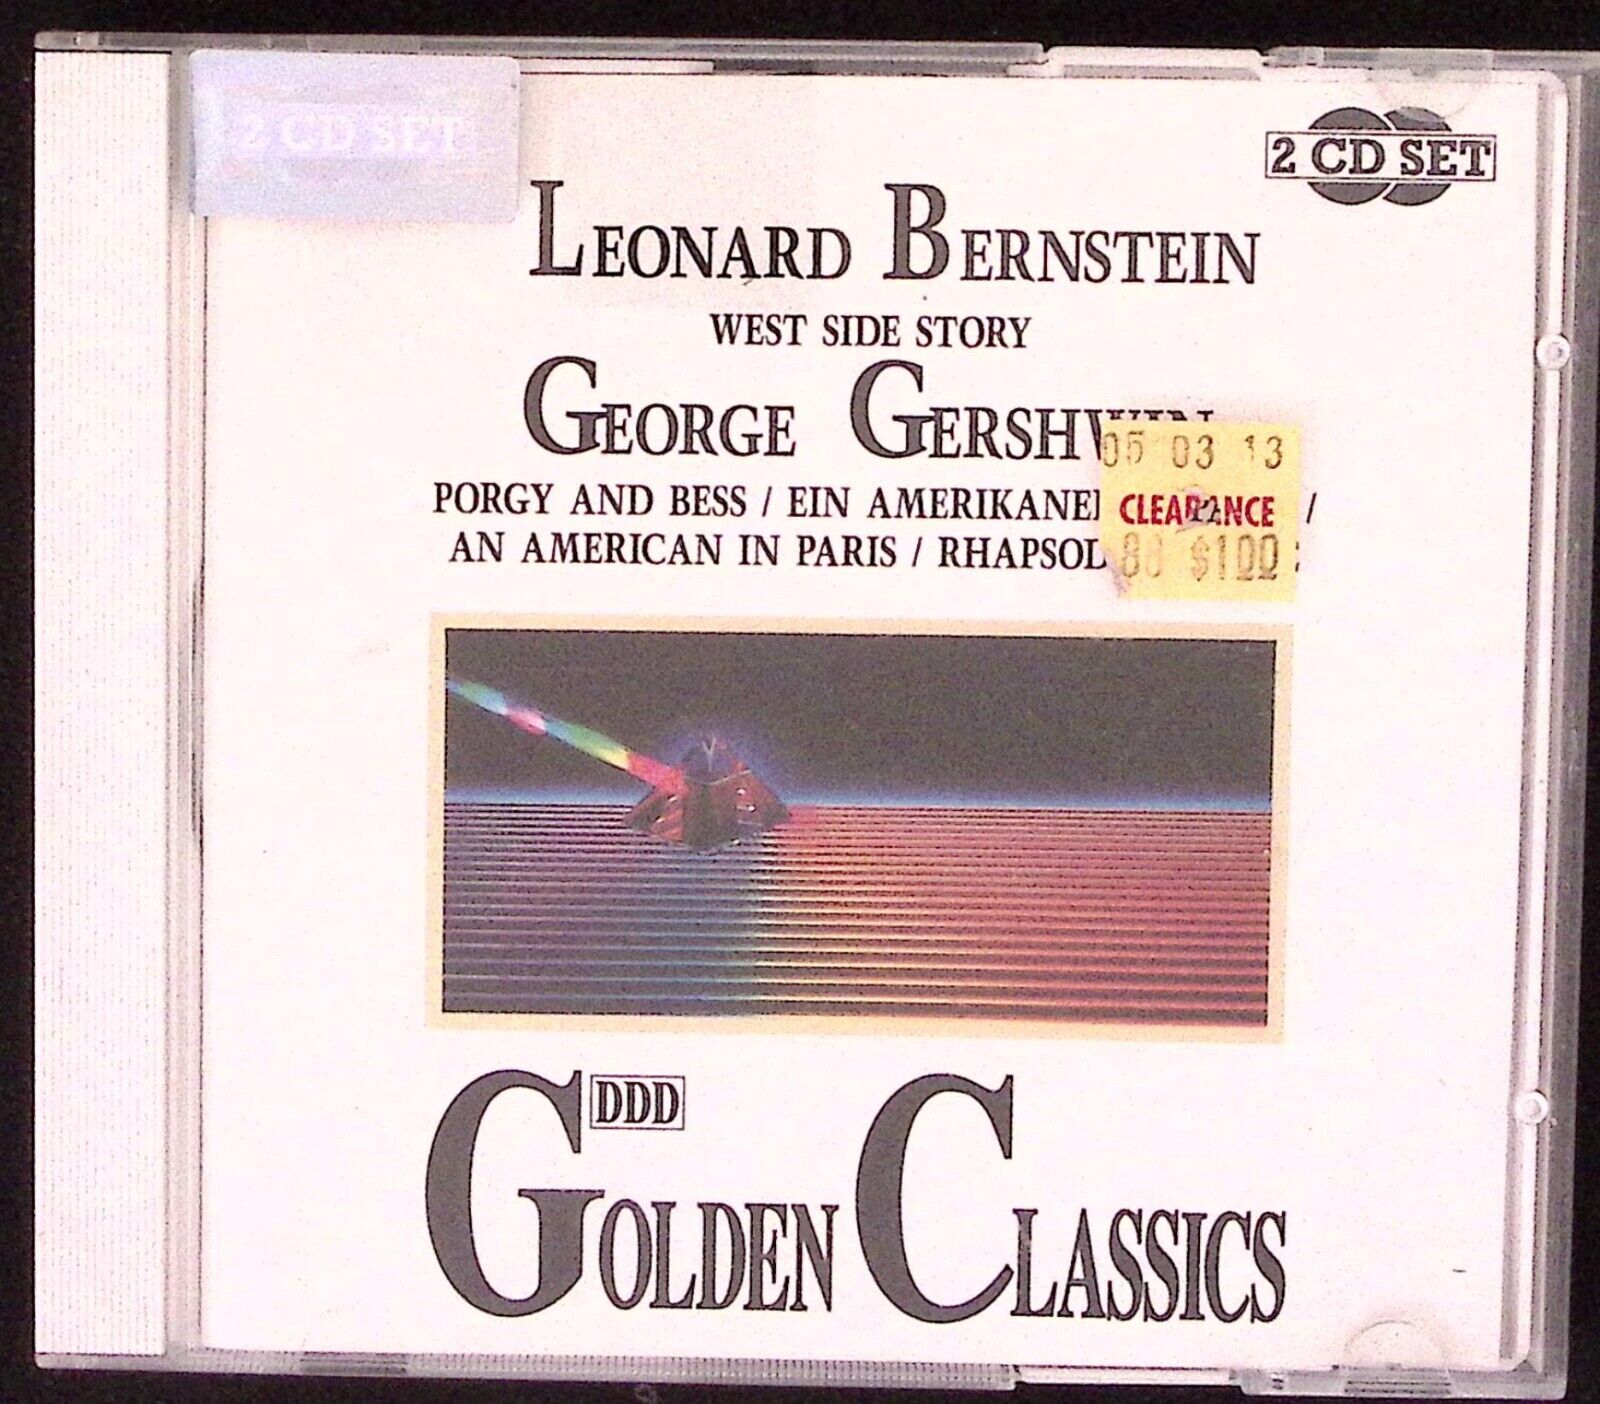 LEONARD BERNSTEIN GEORGE GERSHWIN GOLDEN CLASSICS WEST SIDE STORY MORE 2-CD 664